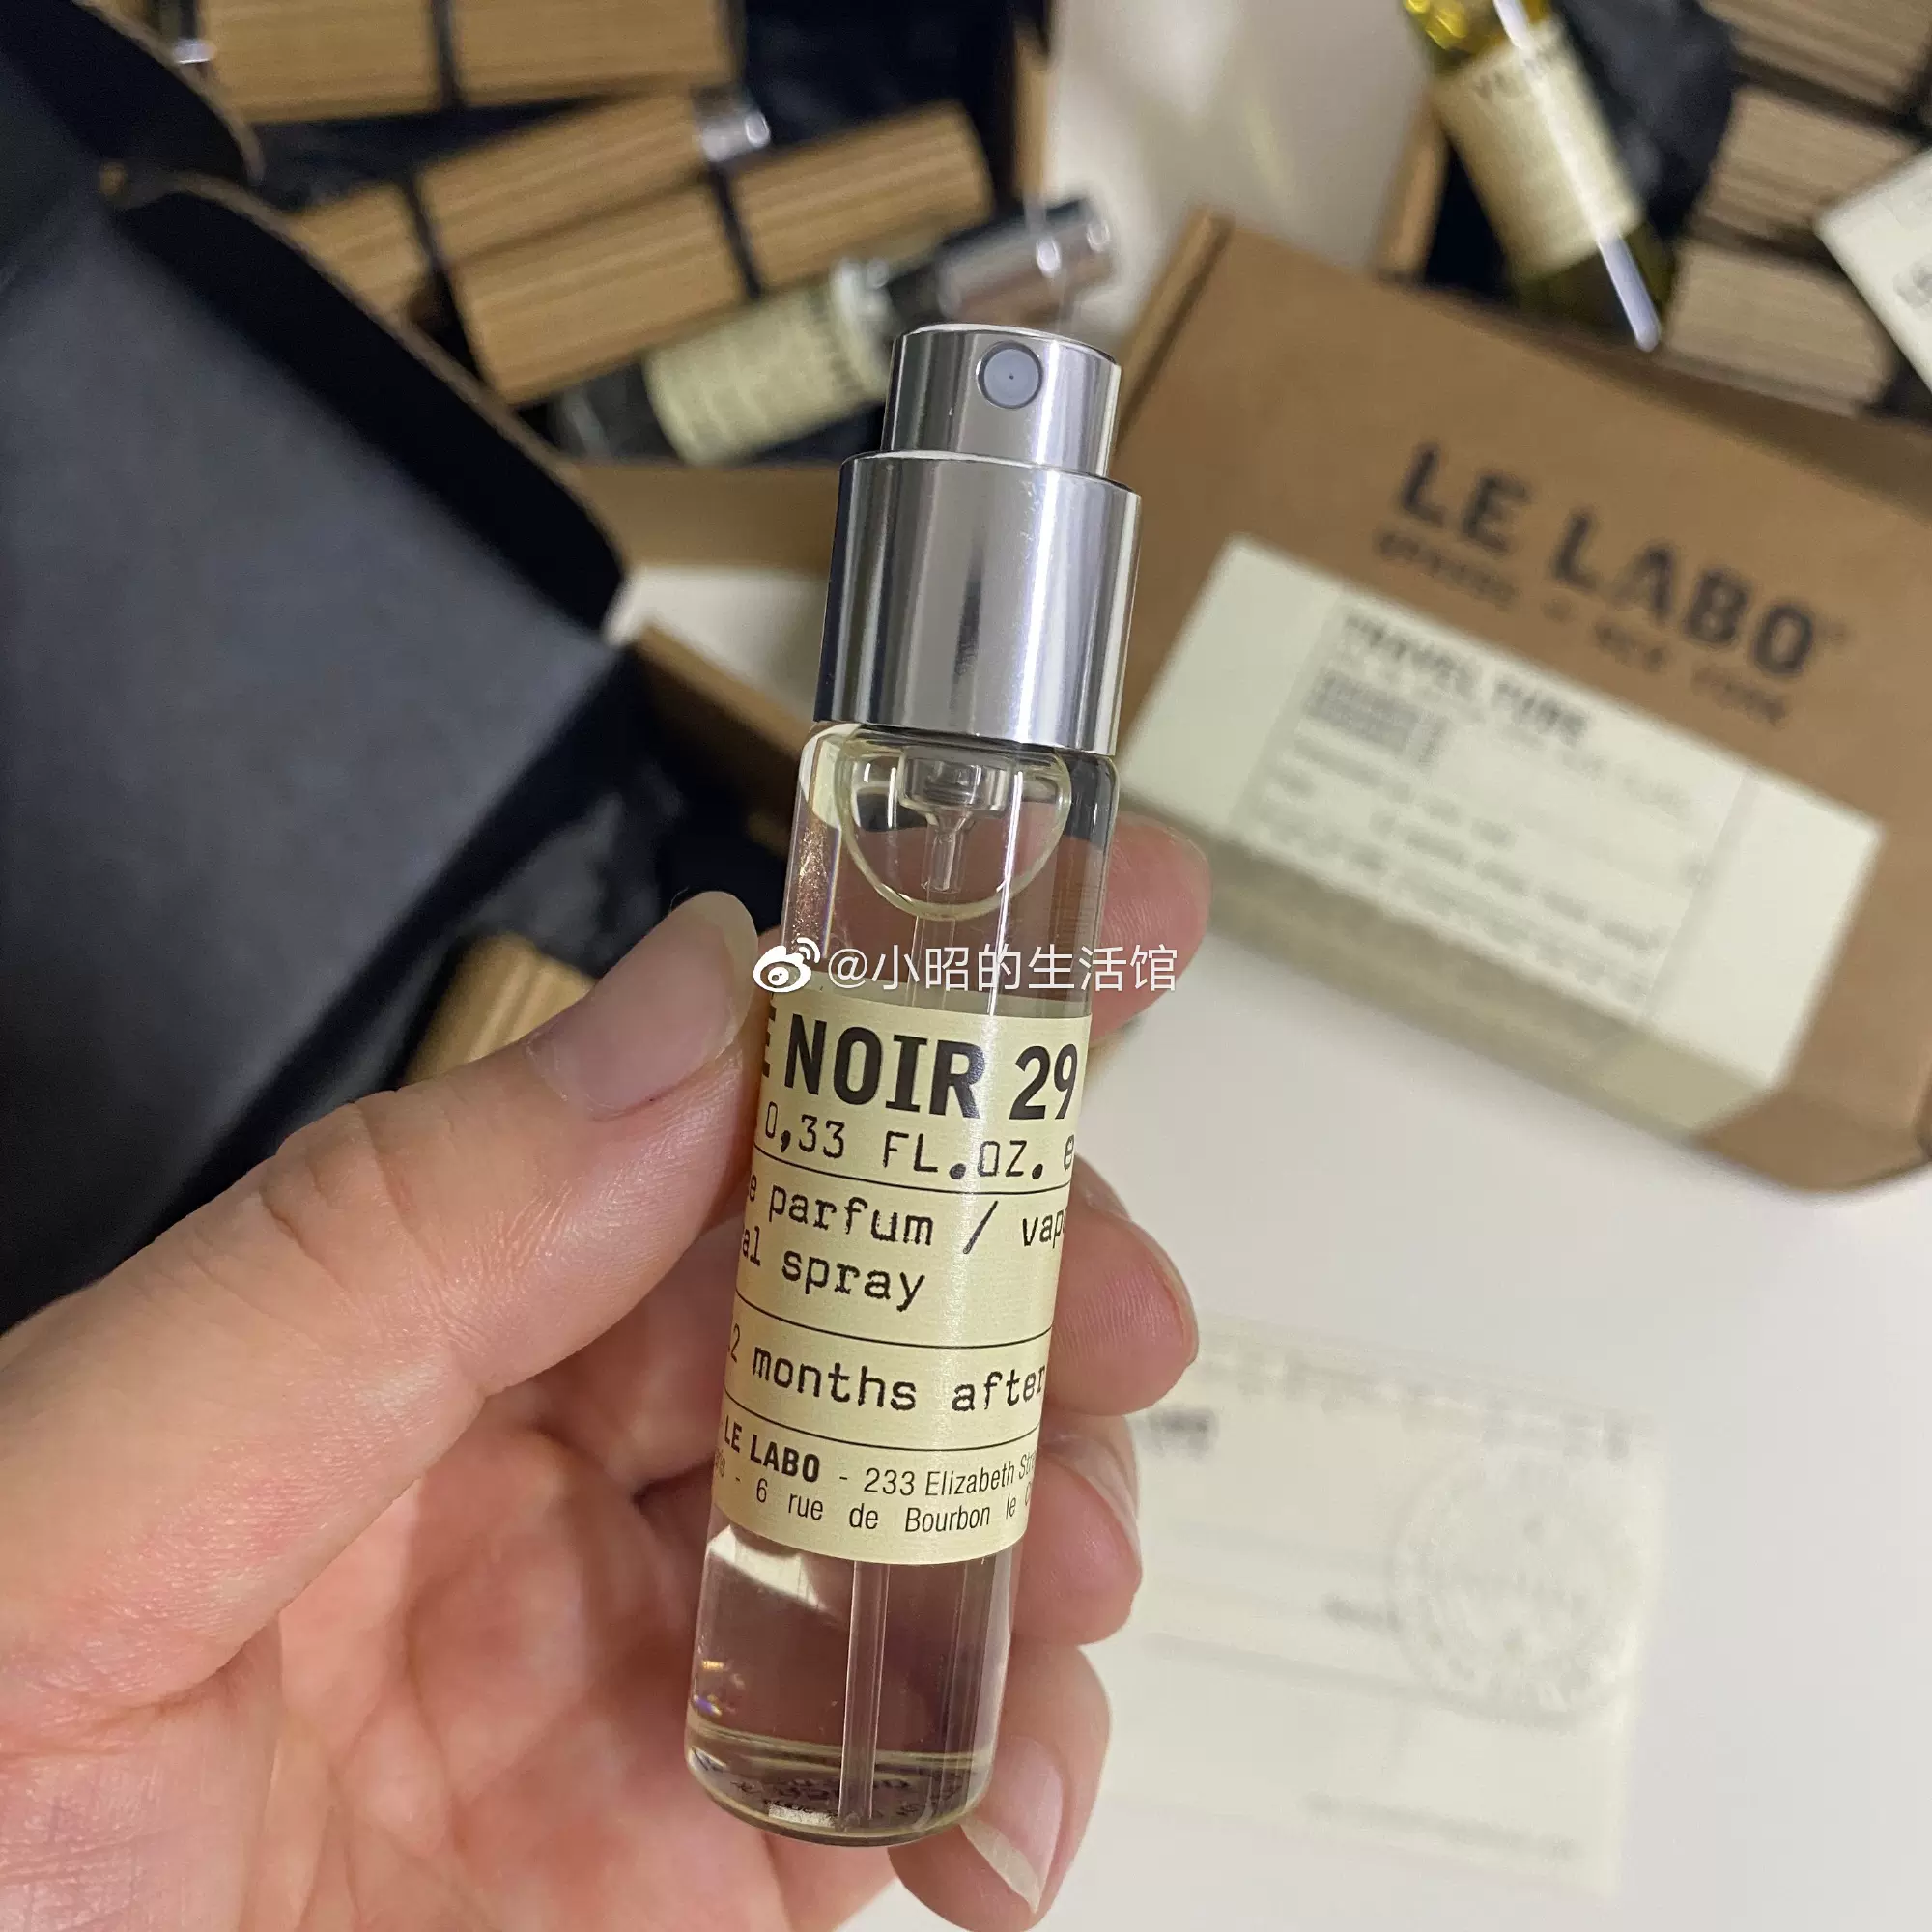 LELABO THE NOIR29 テノワール29 10ml ストアー - 香水(ユニセックス)